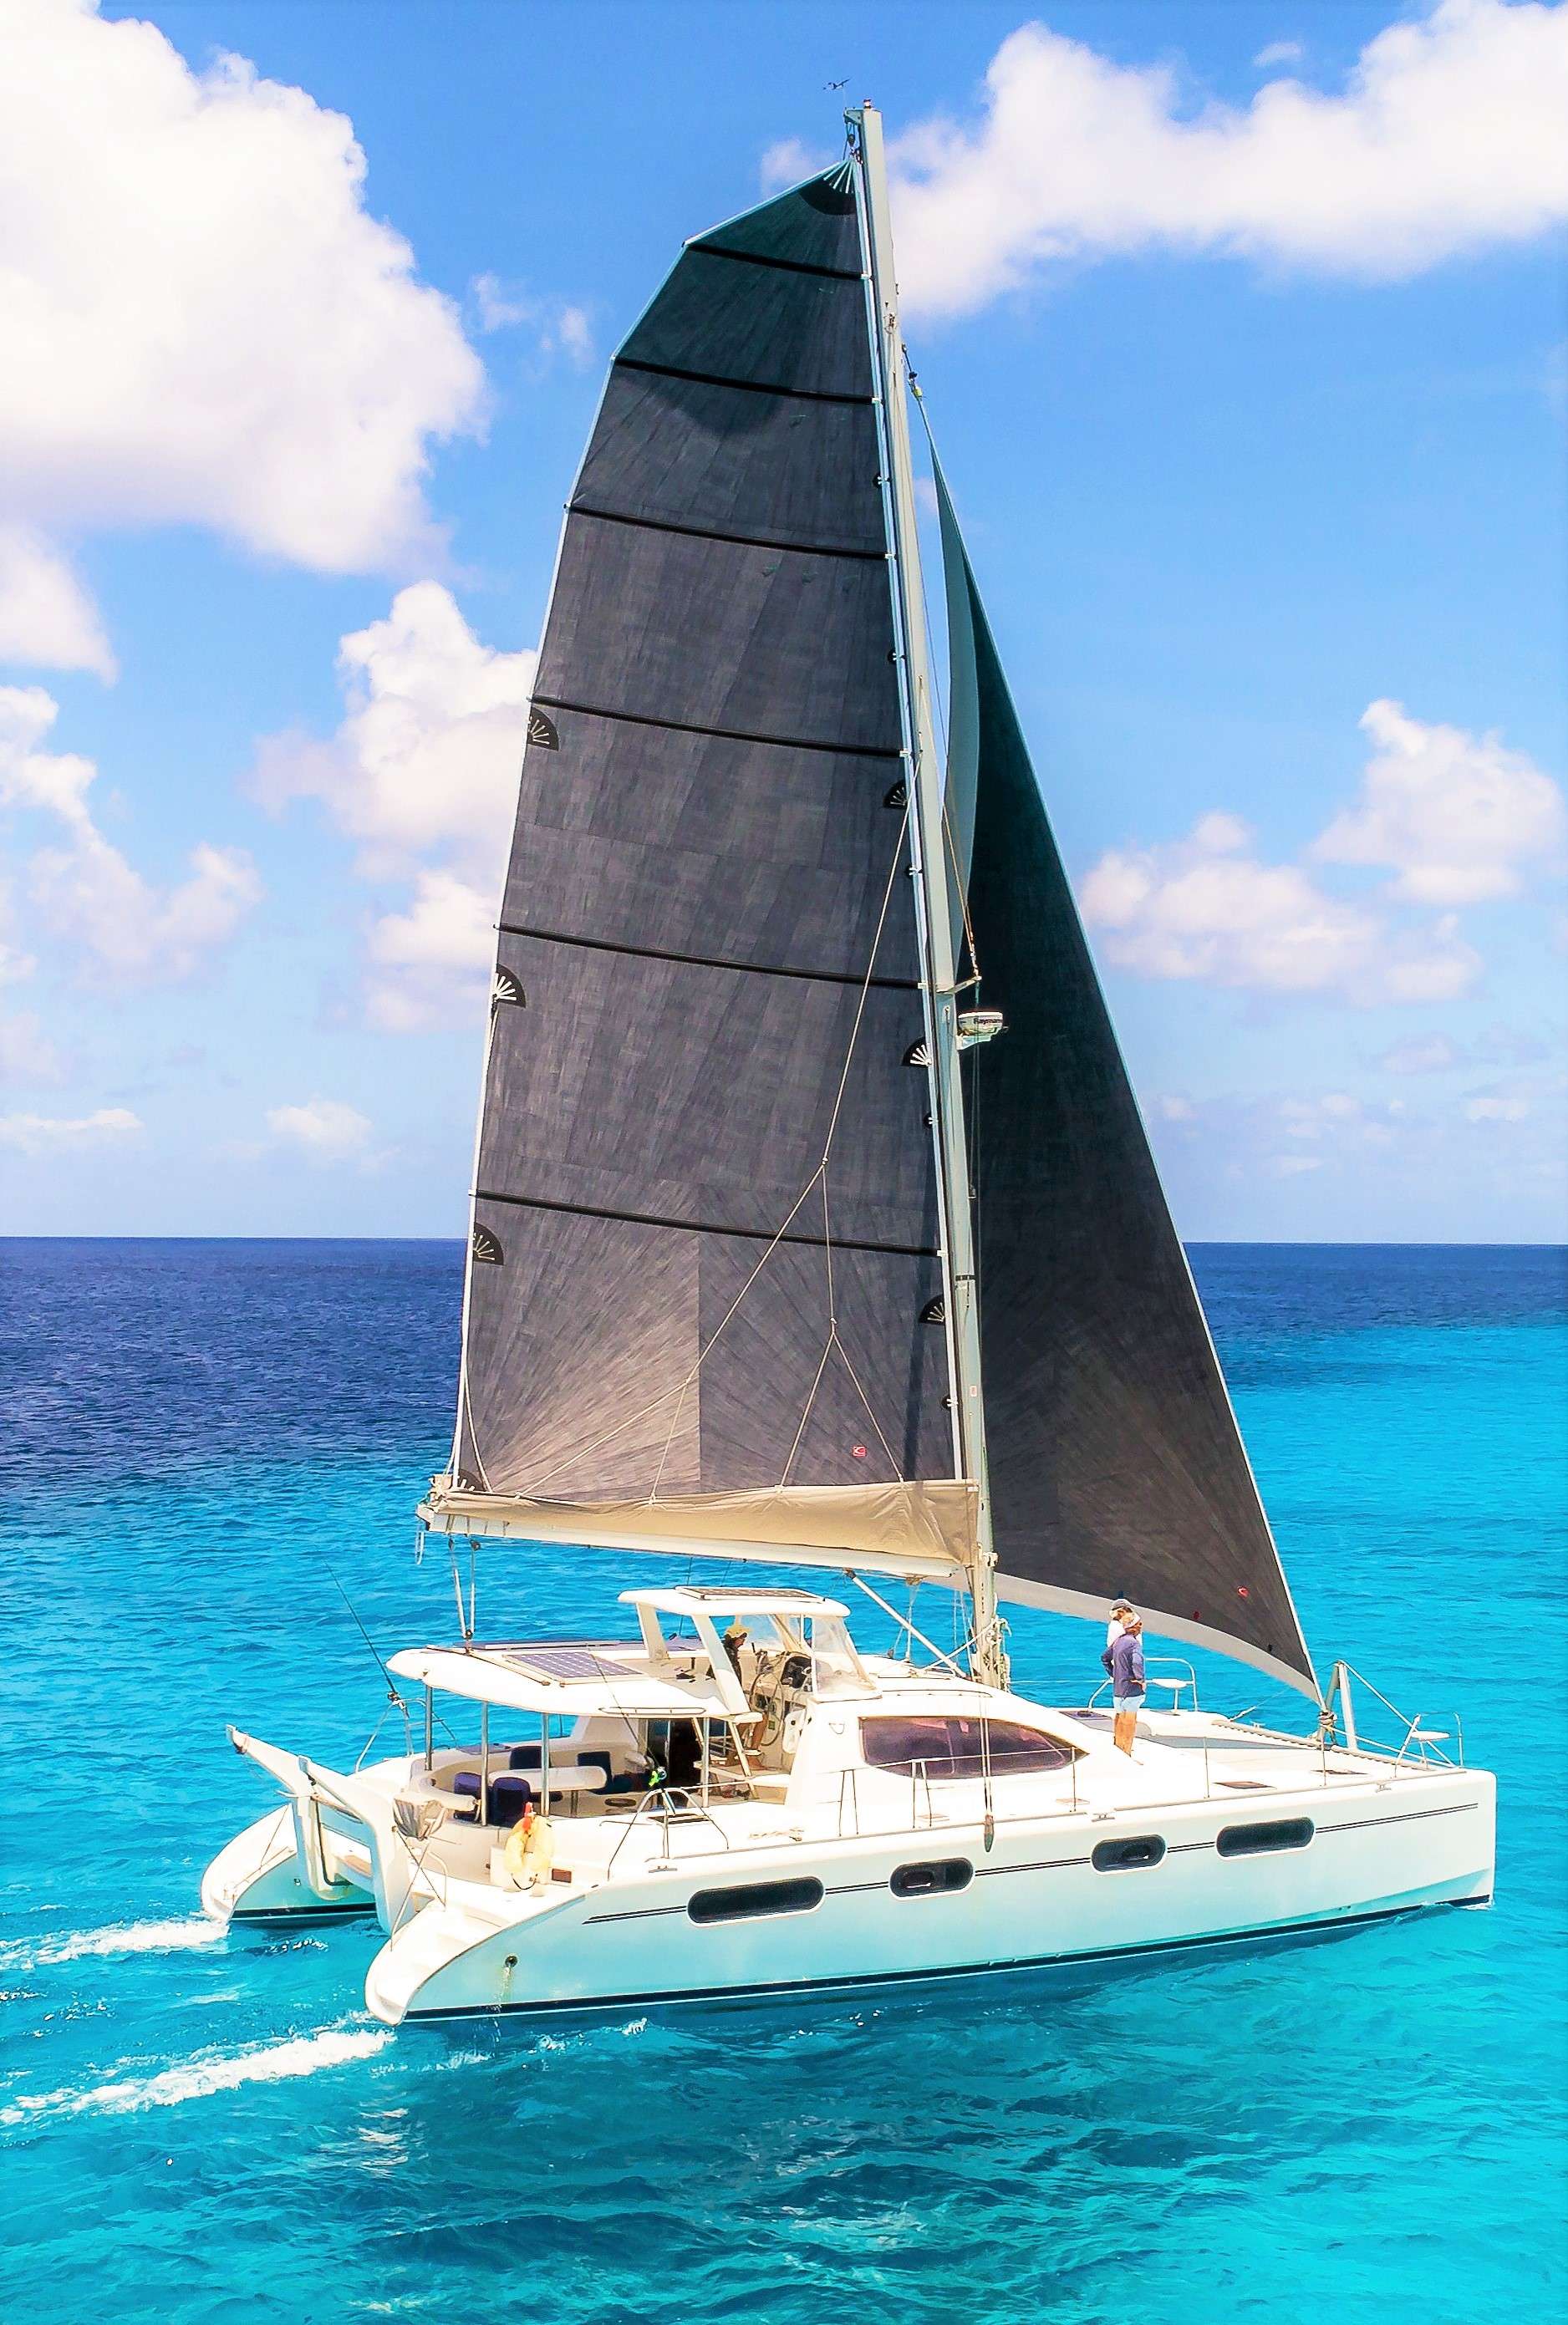 destiny iii - Catamaran Charter Miami & Boat hire in Florida & Bahamas 1